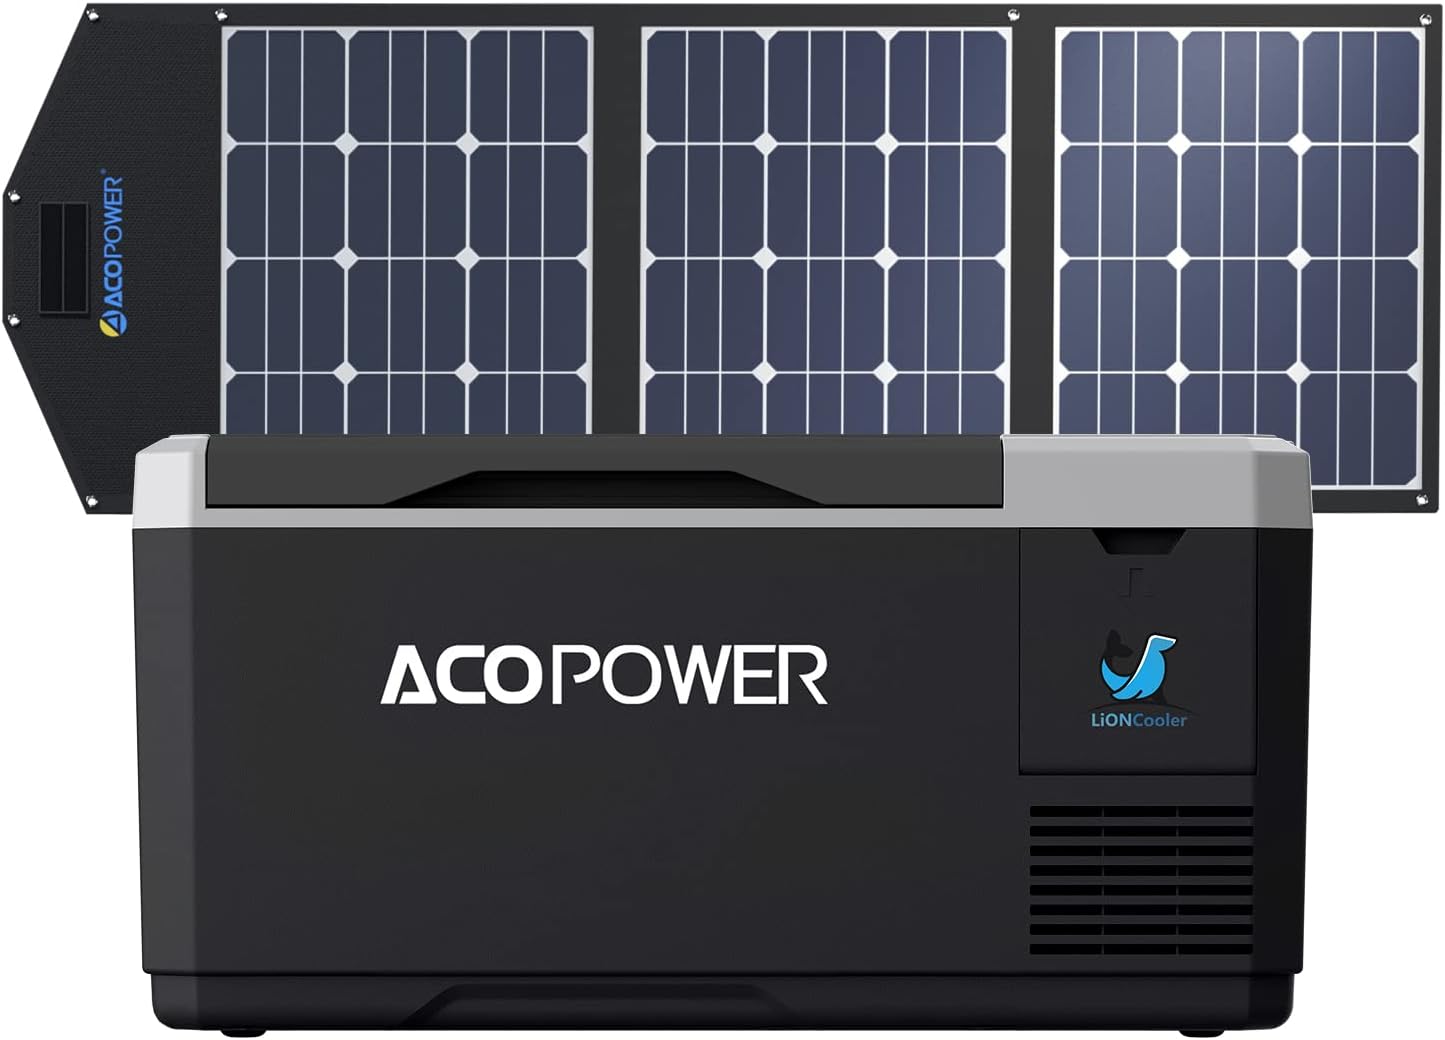 Acopower Solar Cooler